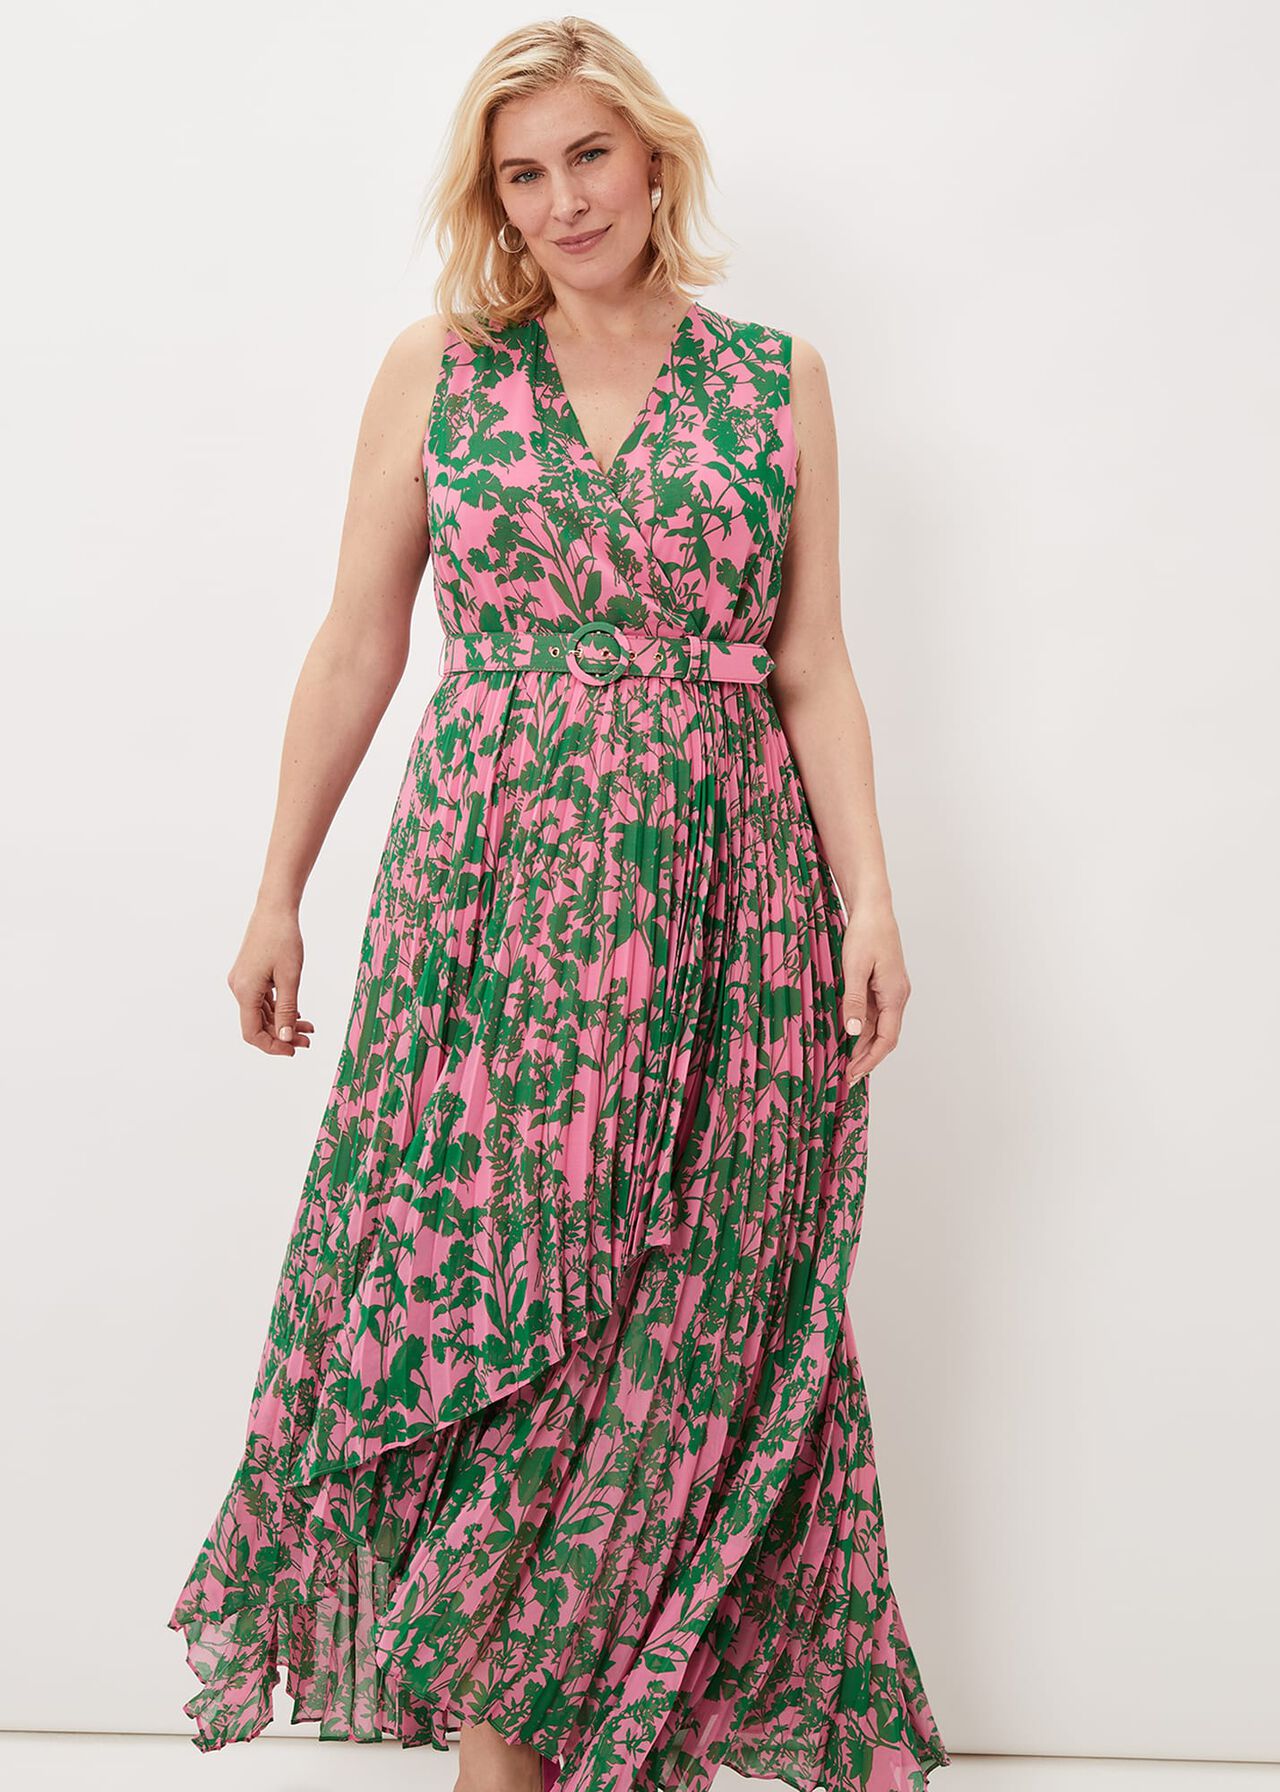 Brianna Pleated Print Dress